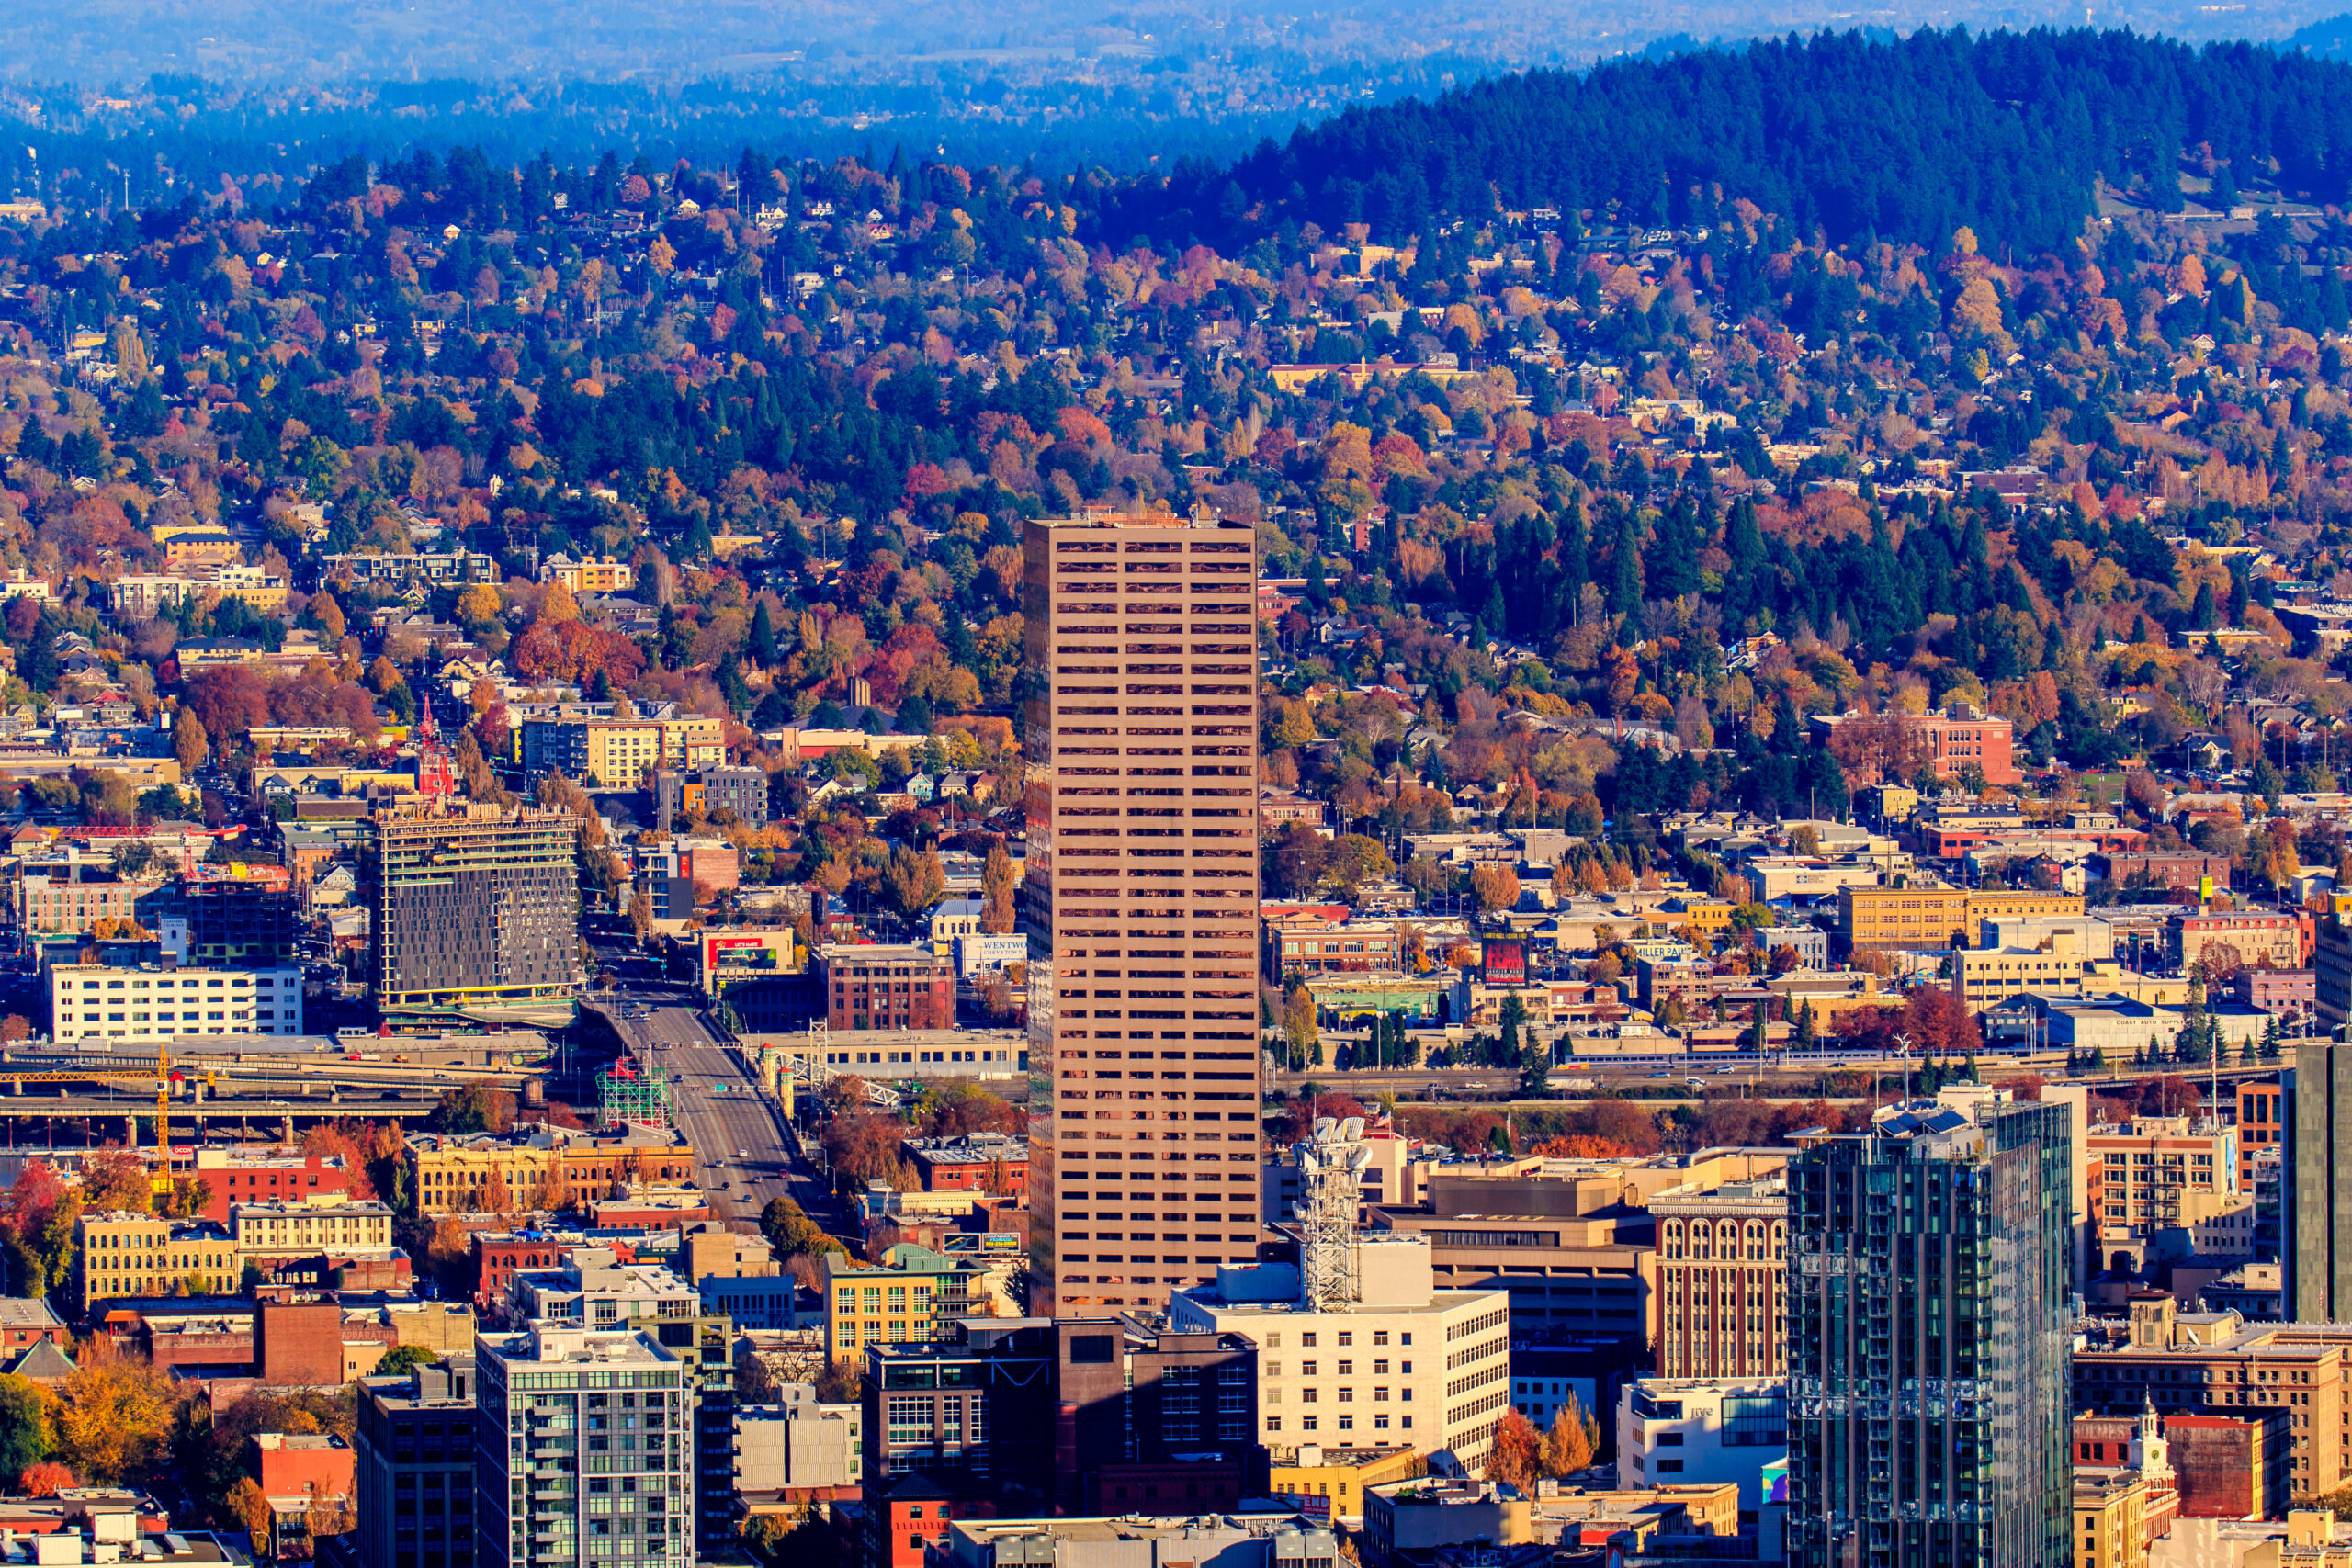 4. Portland, Oregon